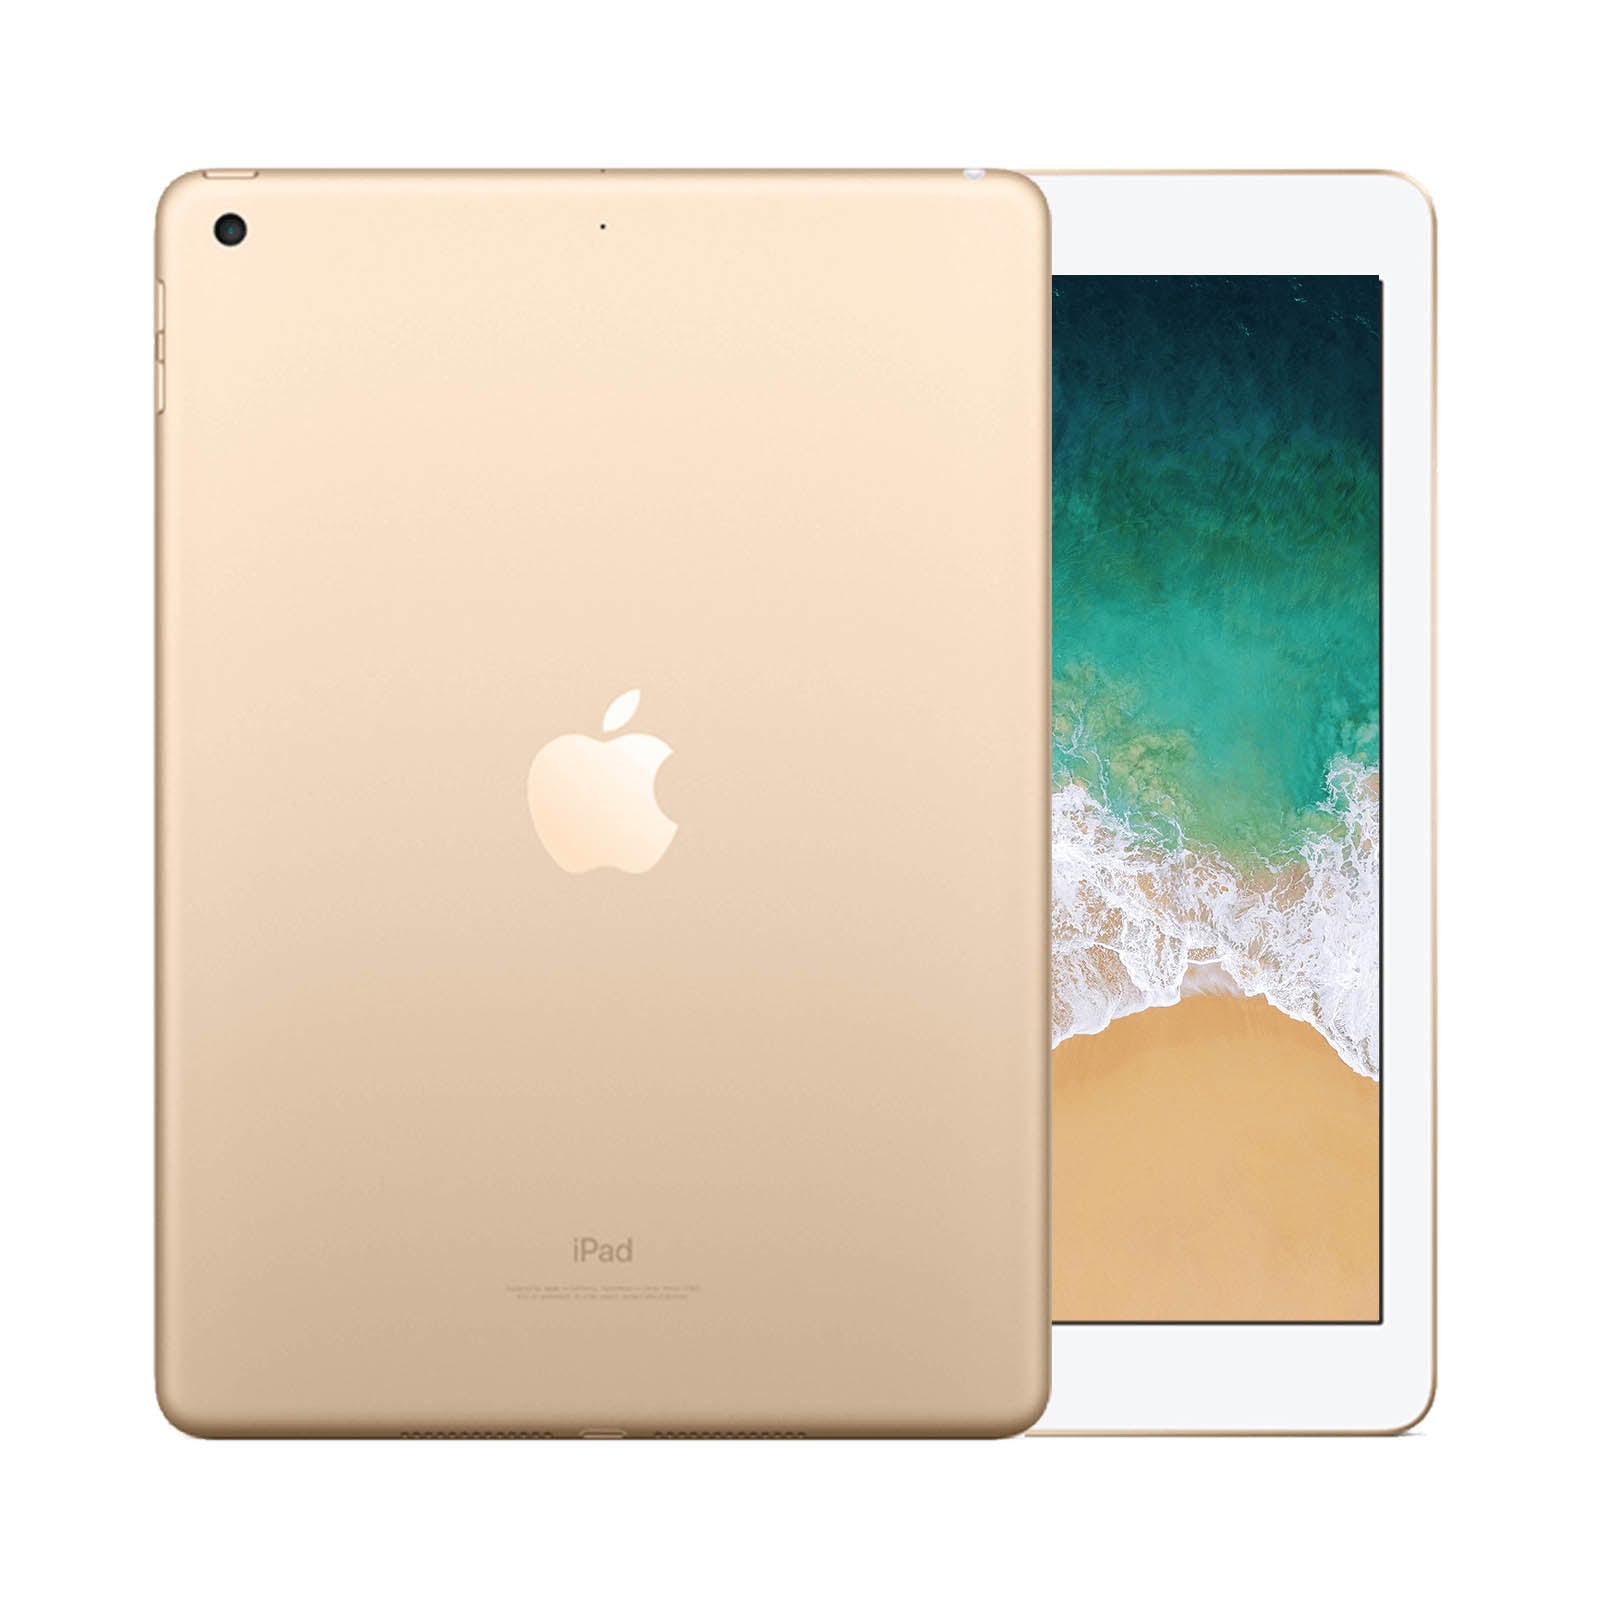 Apple iPad 5 128GB WiFi Gold - Pristine